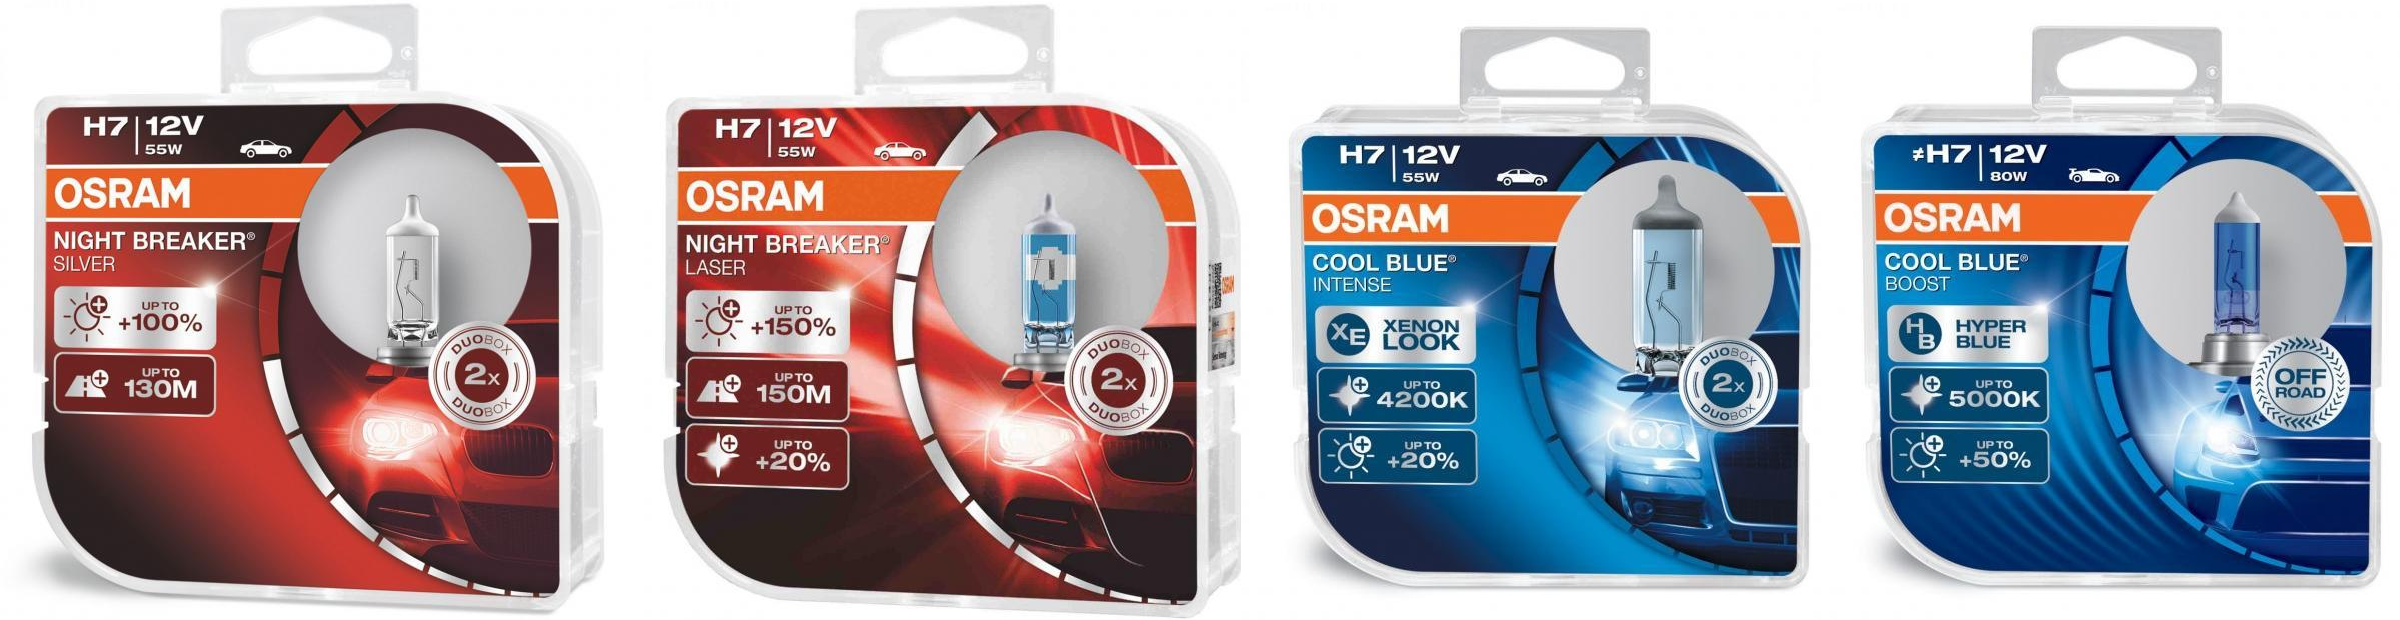 Original Osram Cool Blue Intense Duo-Pack H15 Bulbs Lamps for Low Beam Light